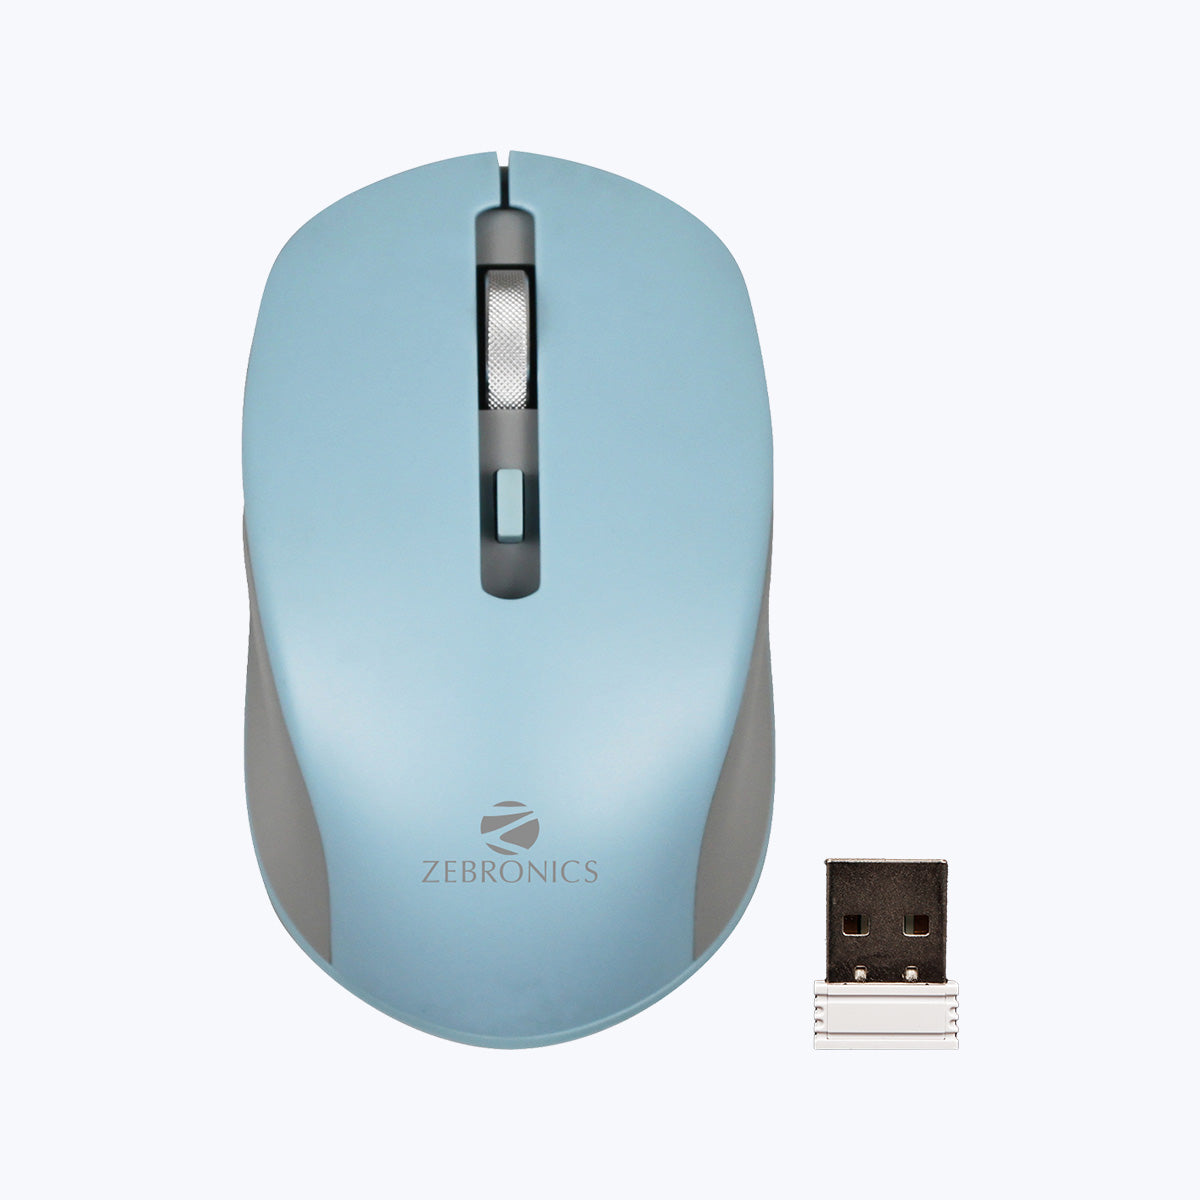 Zeb-Jaguar - Wireless mouse - Zebronics